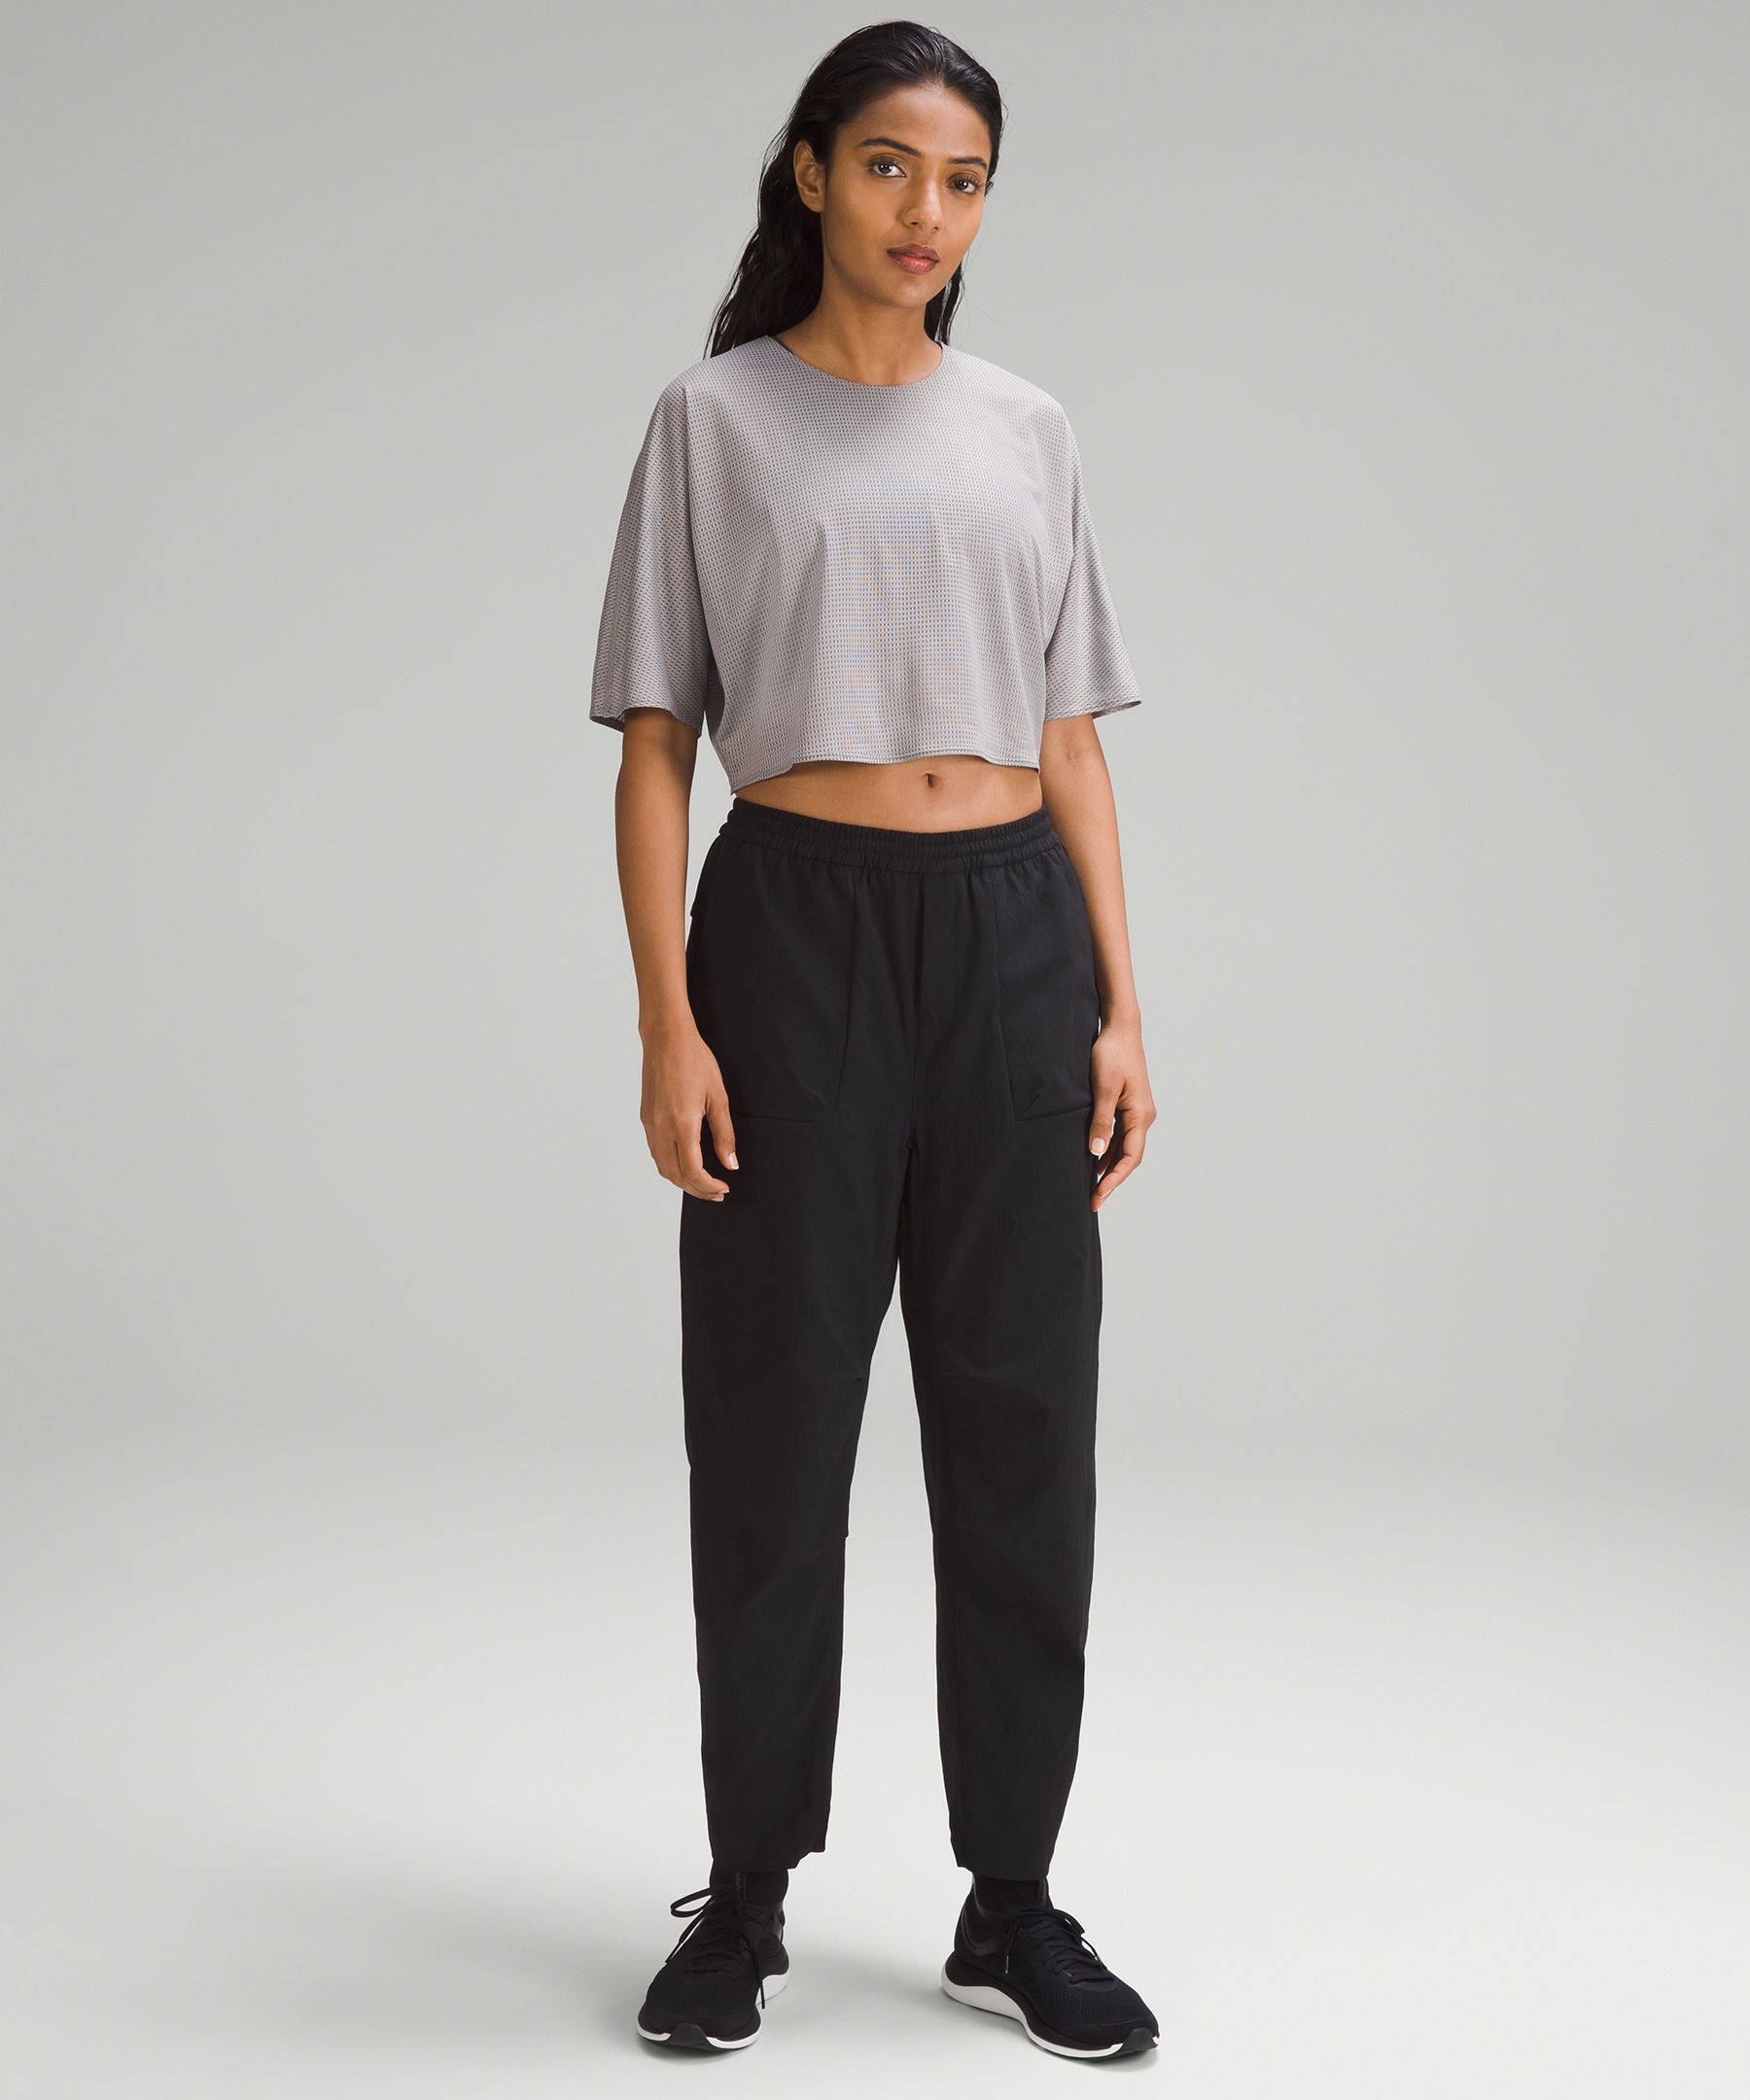 Lululemon Gray Shirt with Mesh Sleeves Women's Size M – MSU